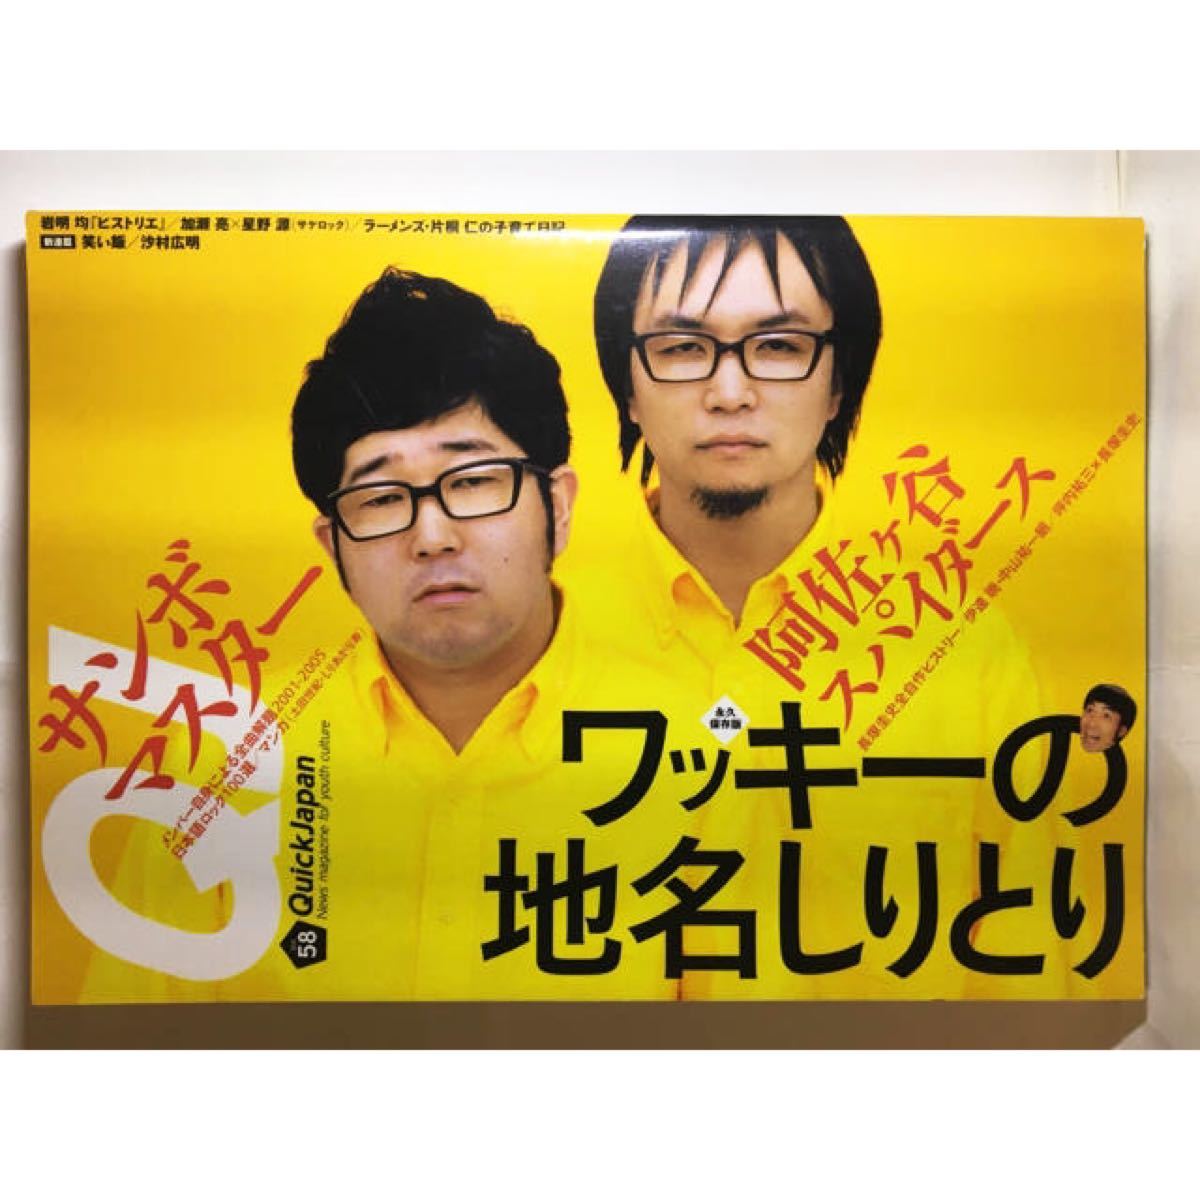 Quick Japan(クイック・ジャパン) Vol.58 サンボマスター特集